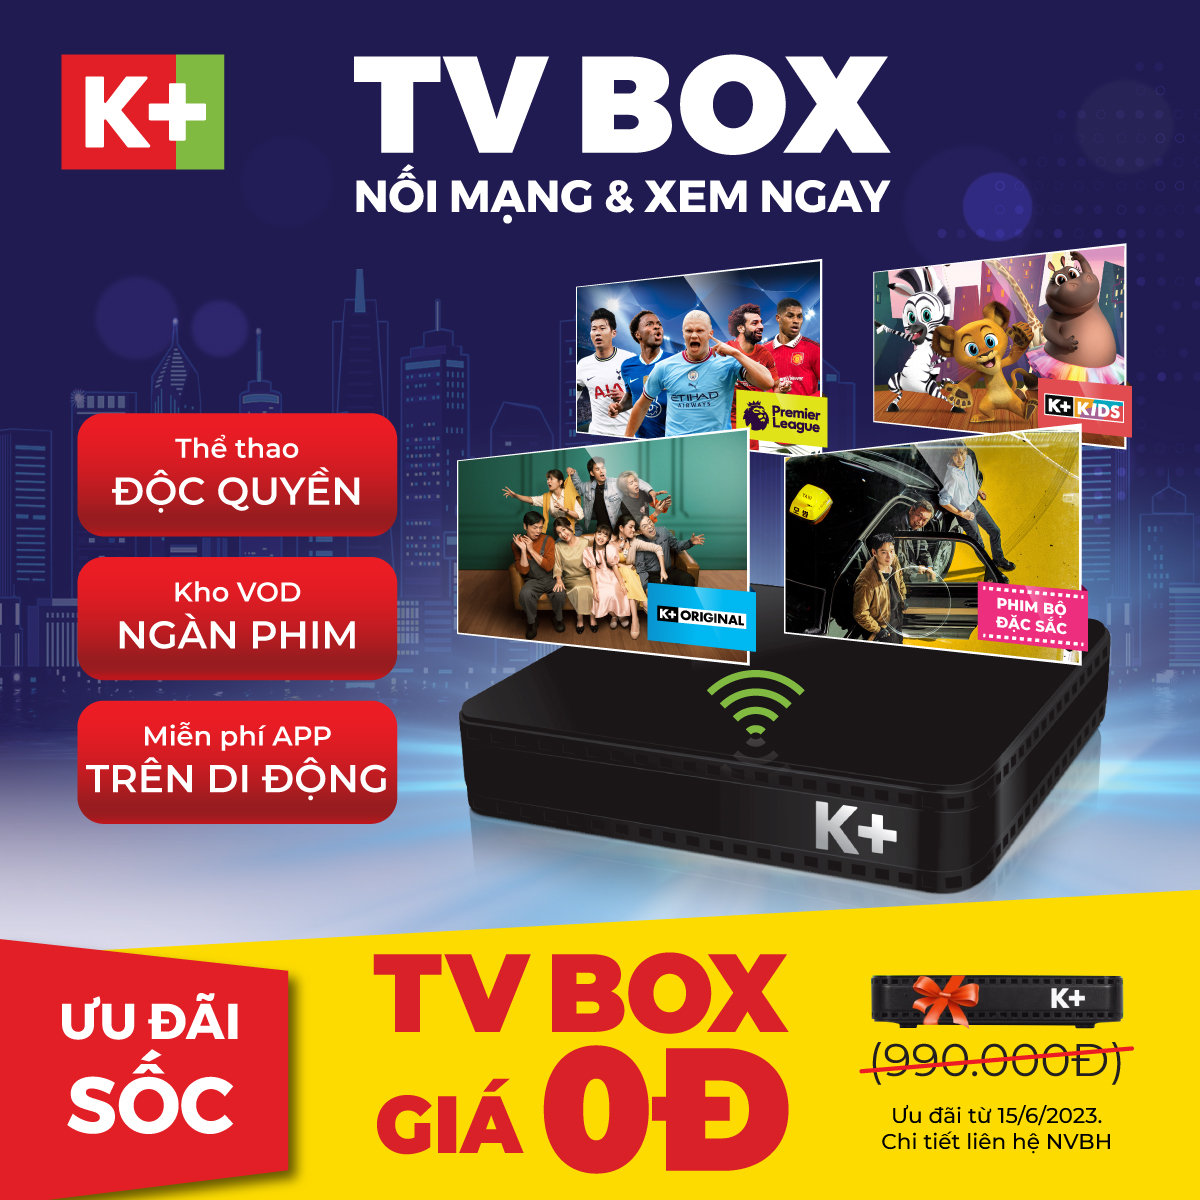 Tặng K+ TV Box Khi Lắp đặt K+ khuyến mãi hè 2023 Facebook Post